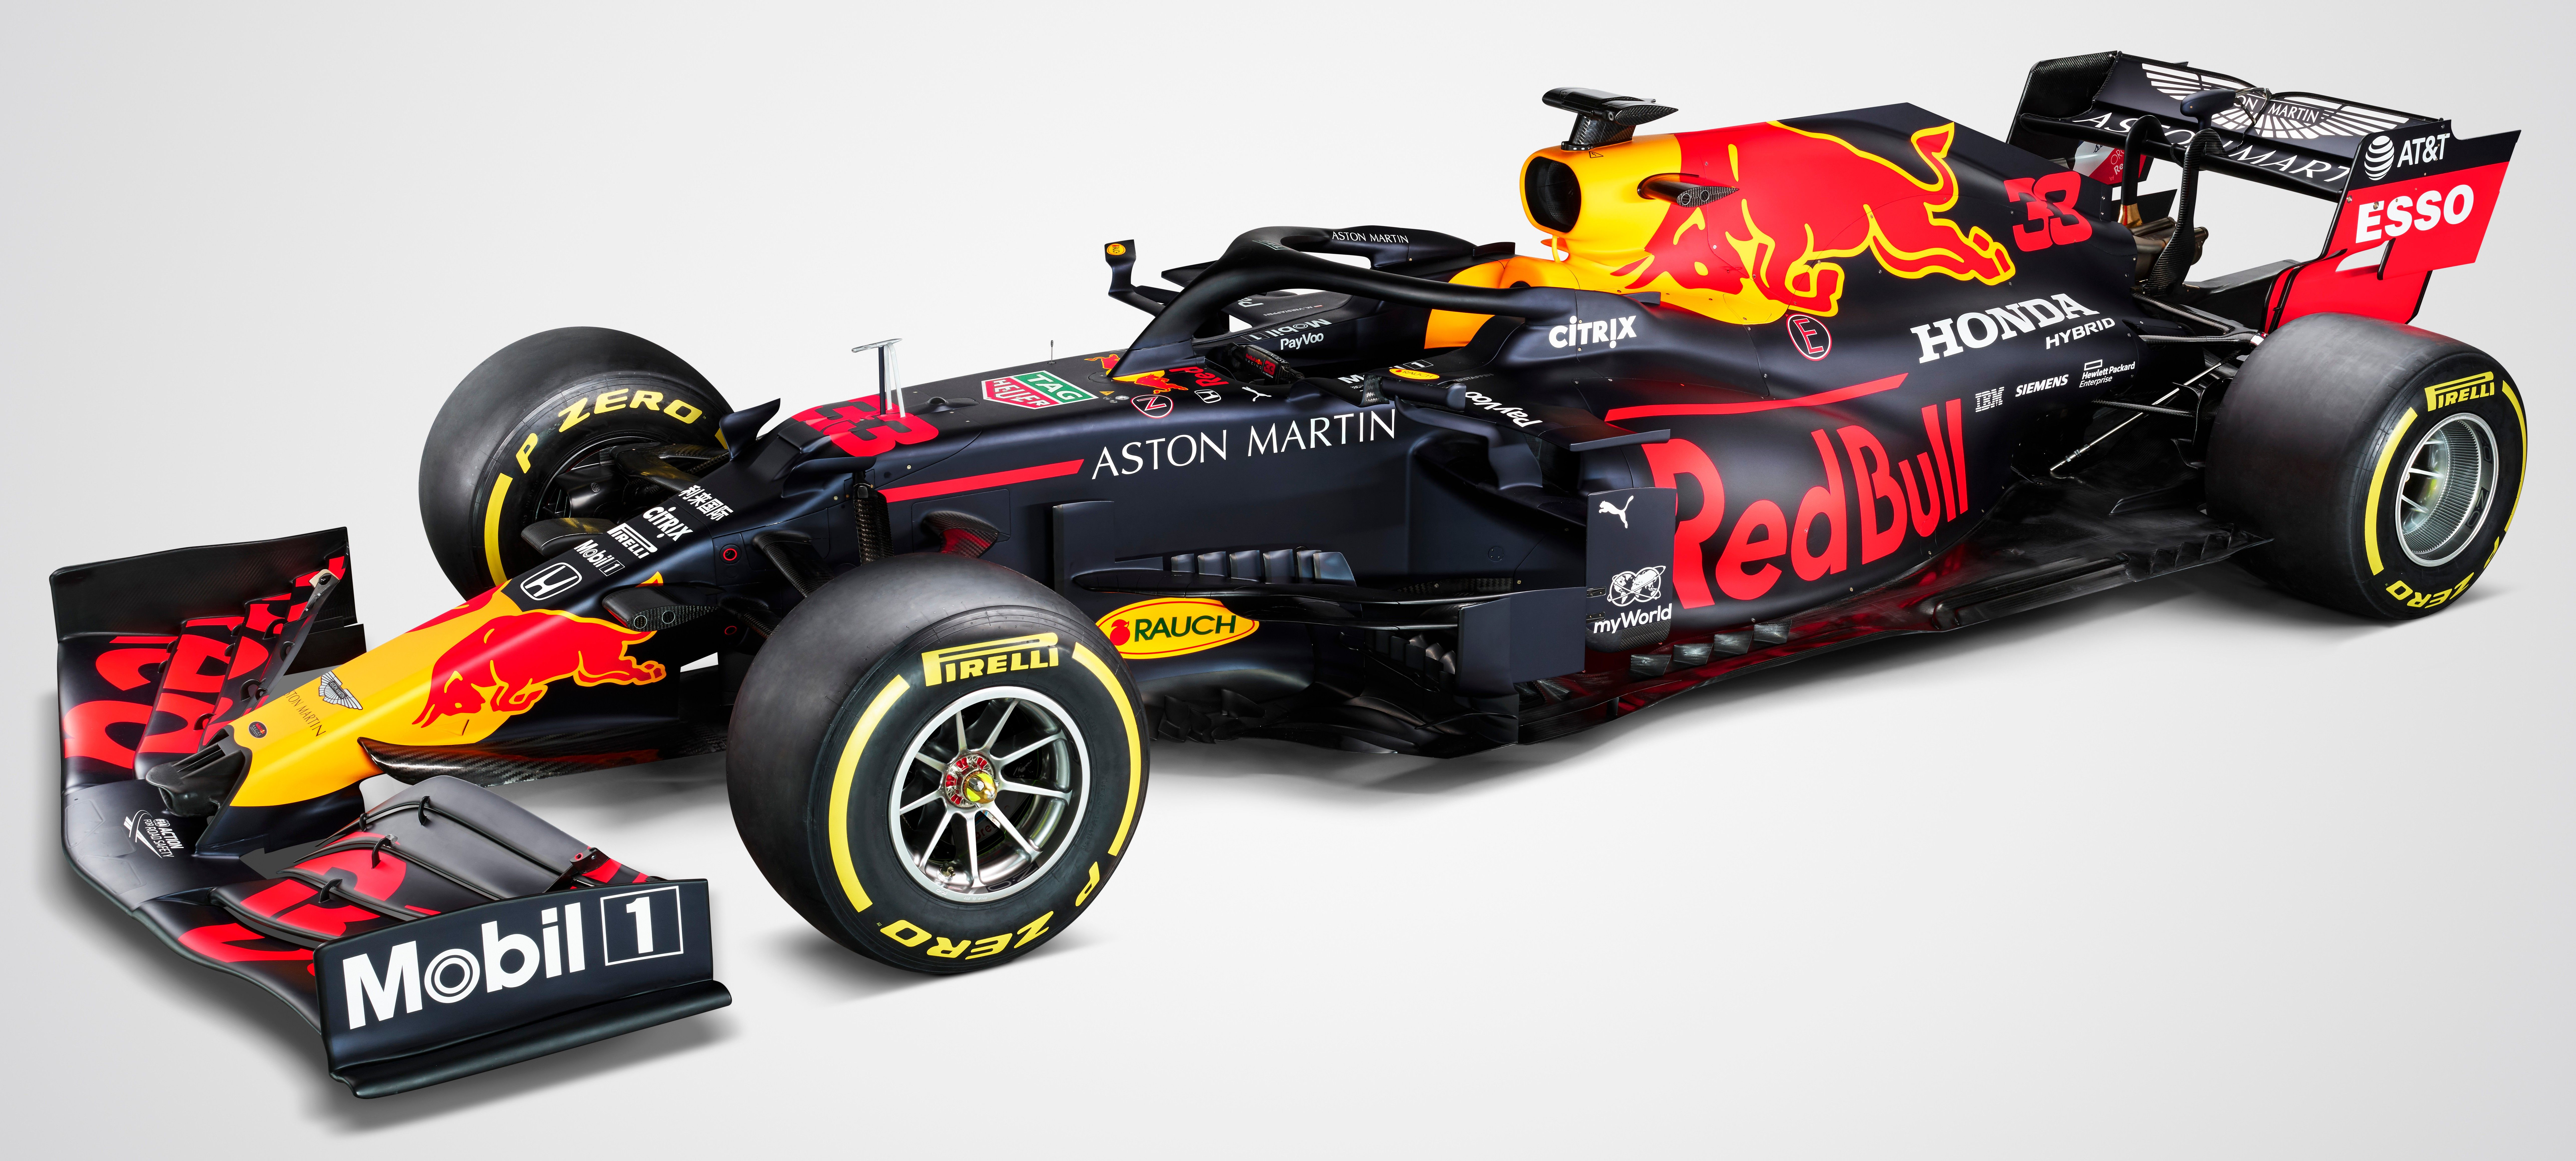 F1: Todas la fotos del Red Bull de 2020, el RB16